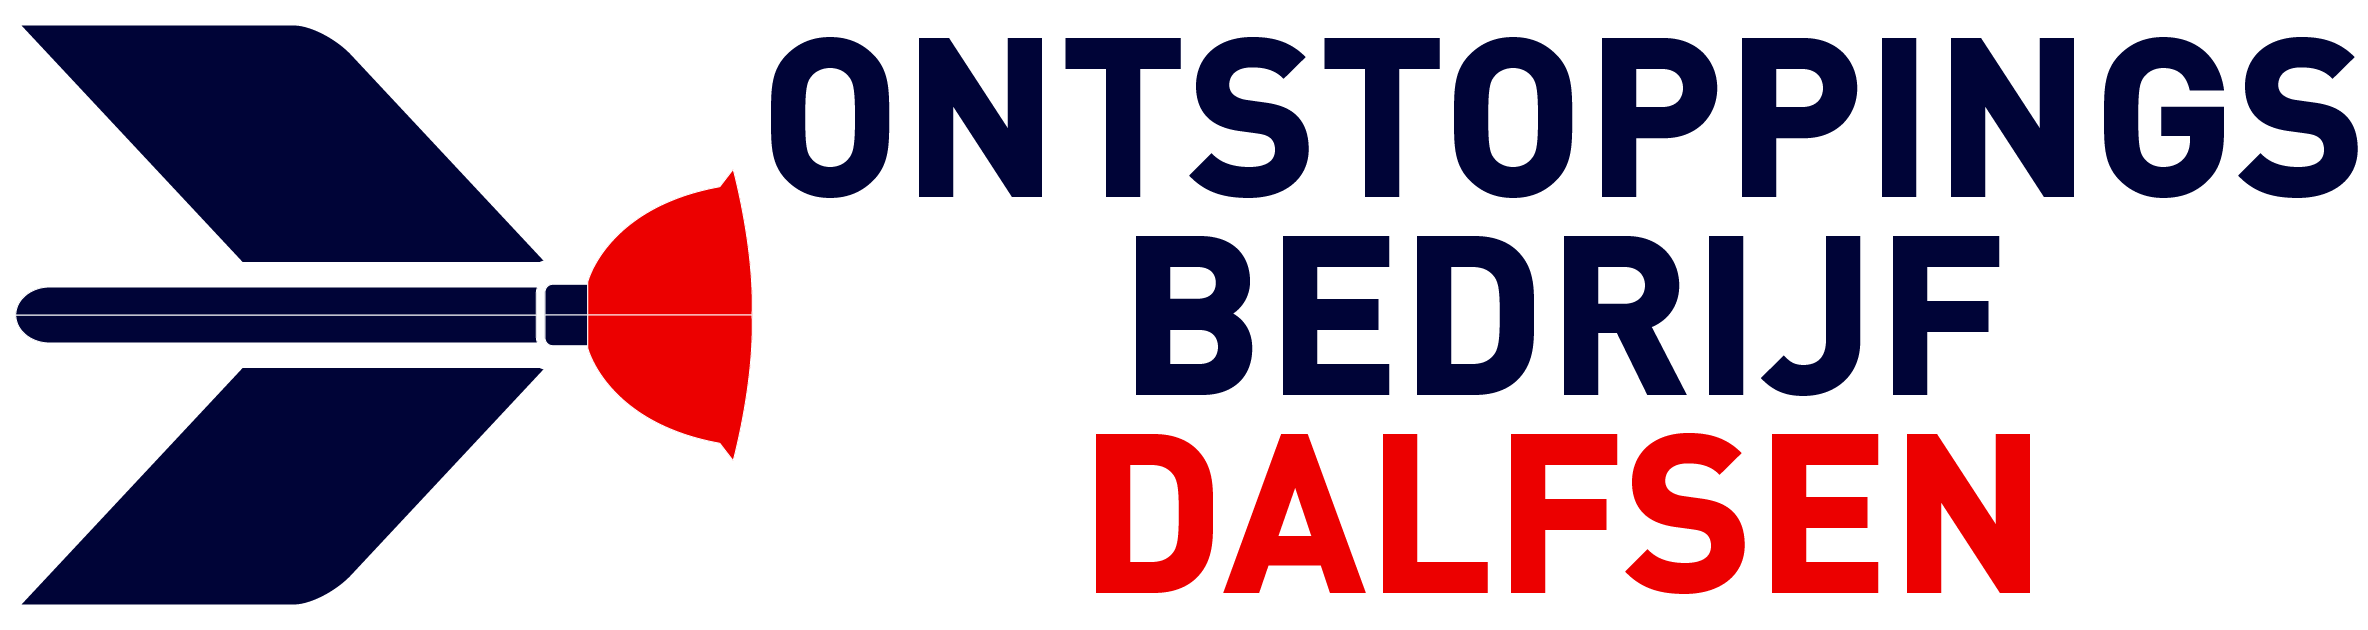 Ontstoppingsbedrijf Dalfsen logo